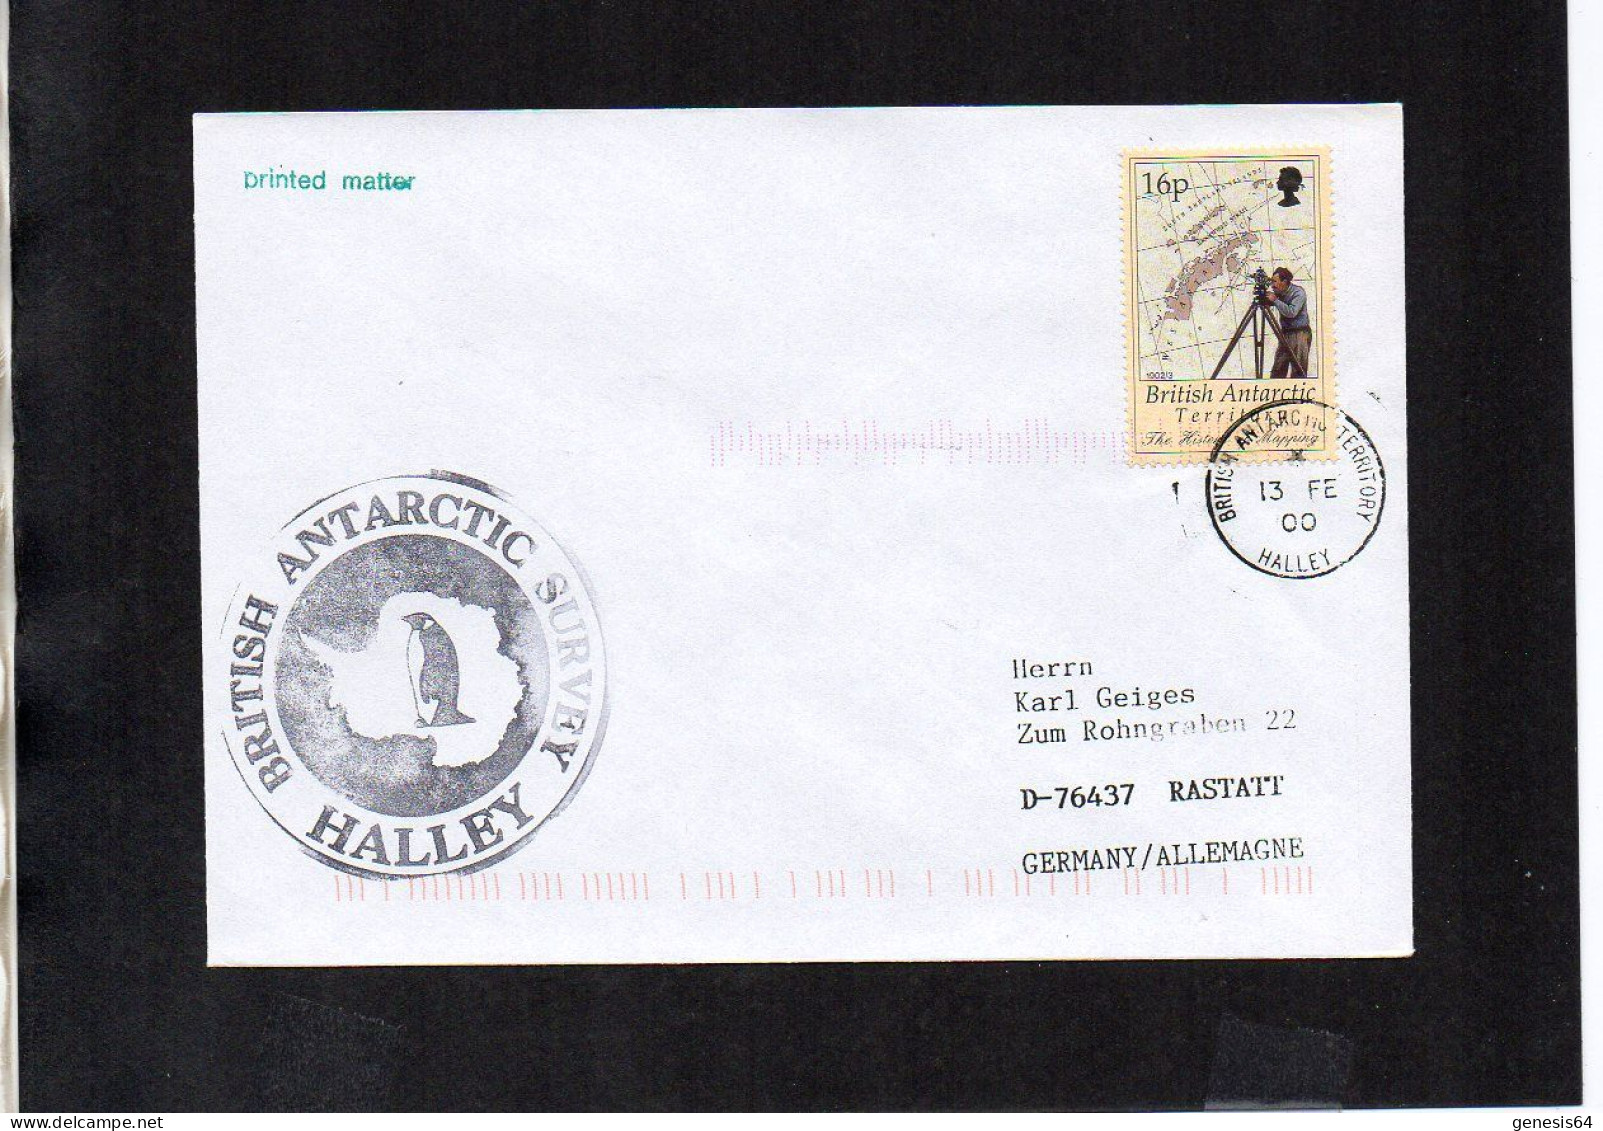 British Antarctic Territory (BAT) 2000 Cover - Halley 13 FE 00 - (1ATK023) - Storia Postale